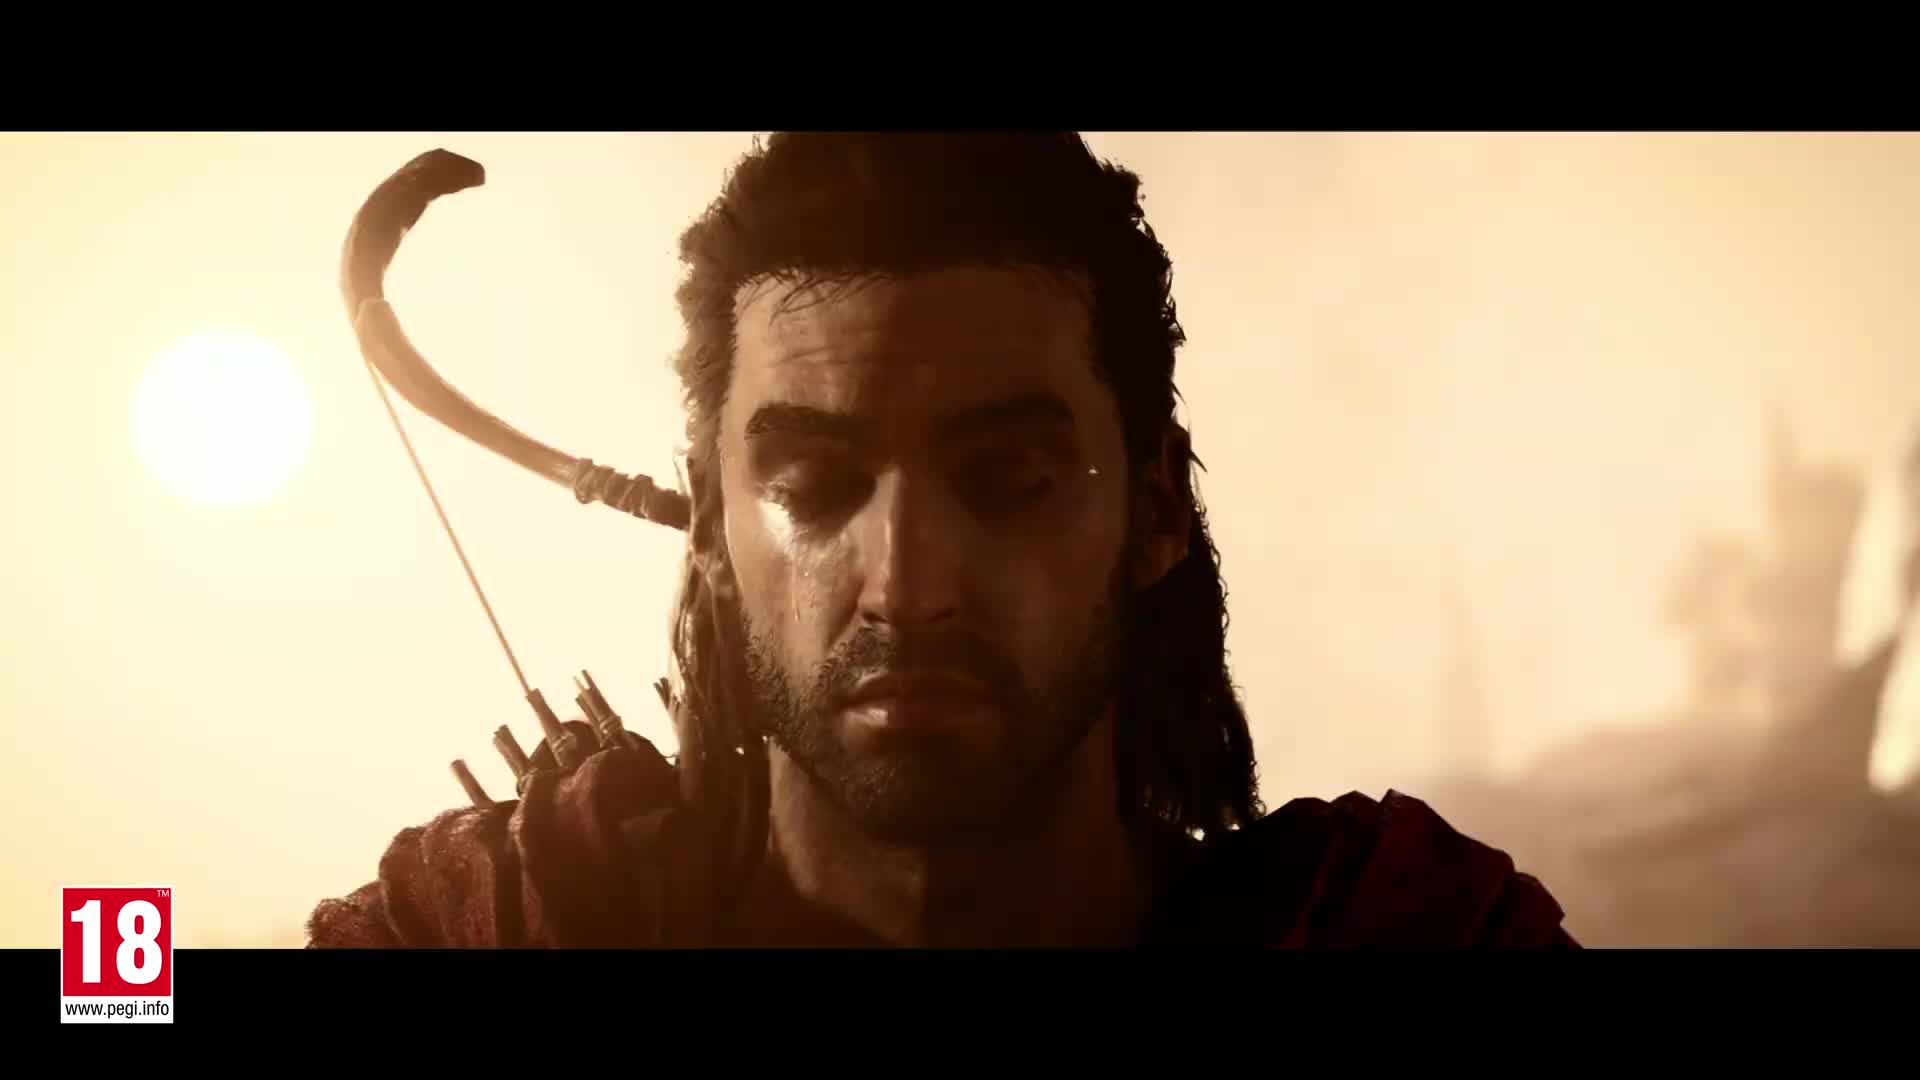 Assassin's Creed Odyssey dostva tretiu epizdu prbehu o skrytej epeli